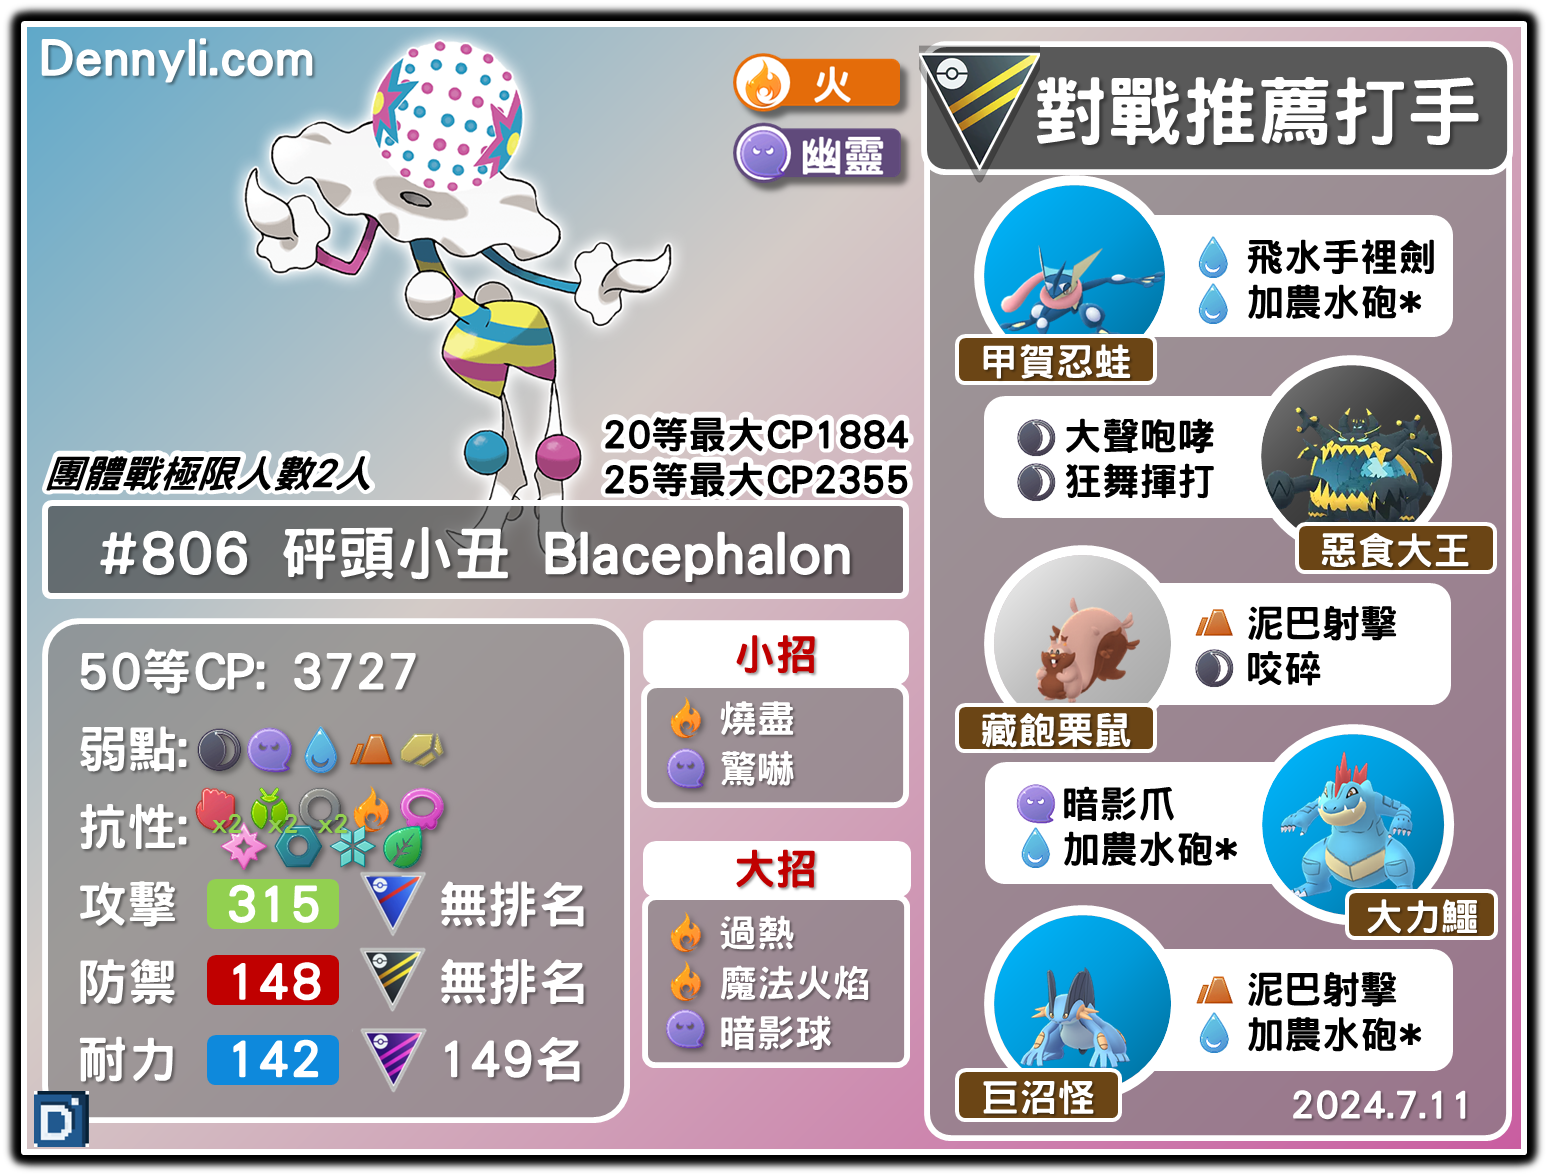 PokemonGo-Blacephalon-20240711